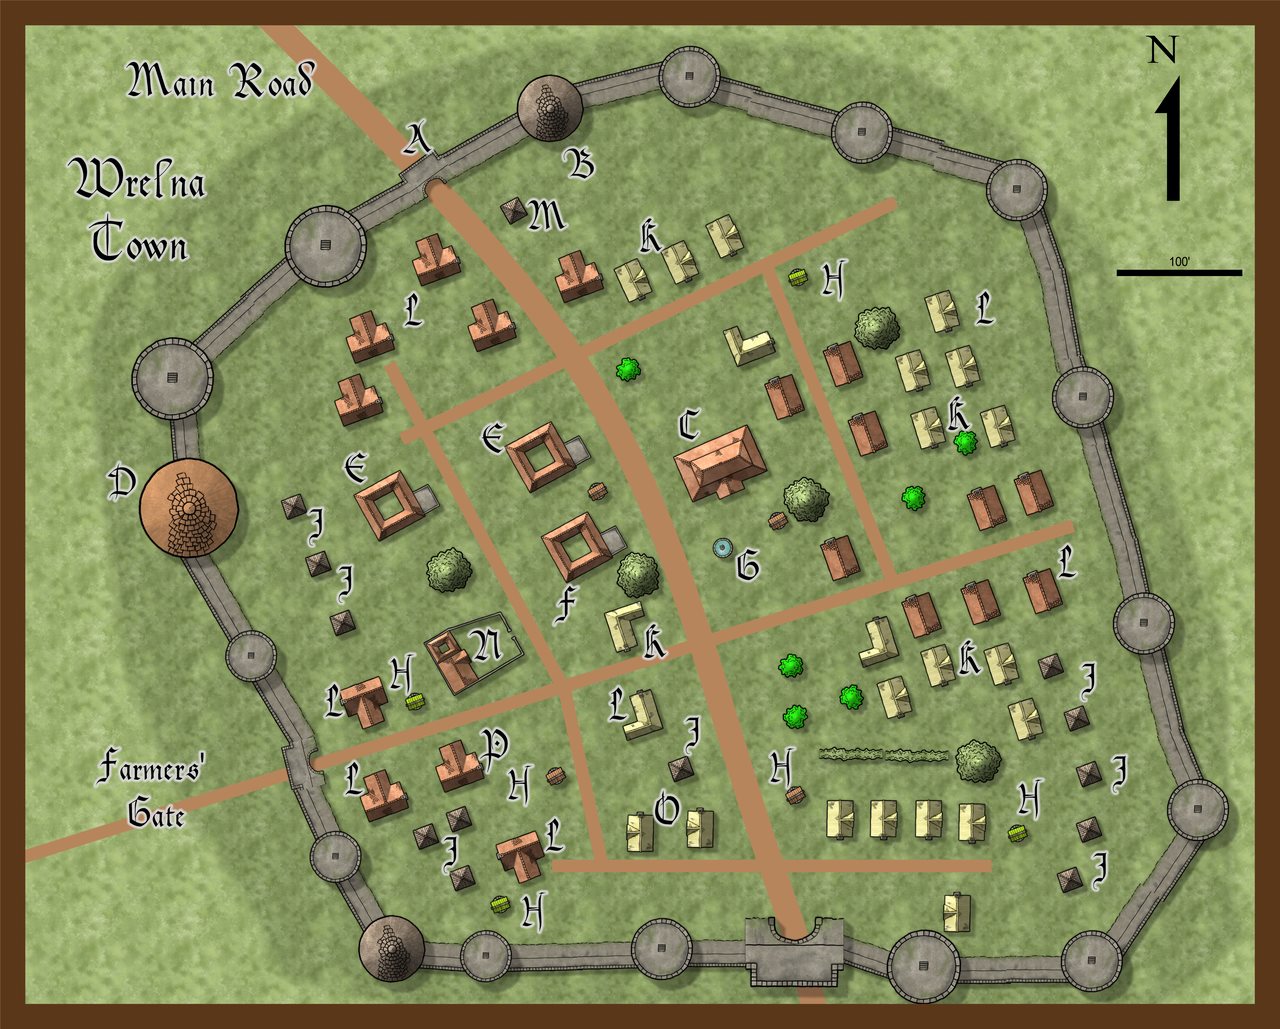 Nibirum Map: wrelna town by JimP